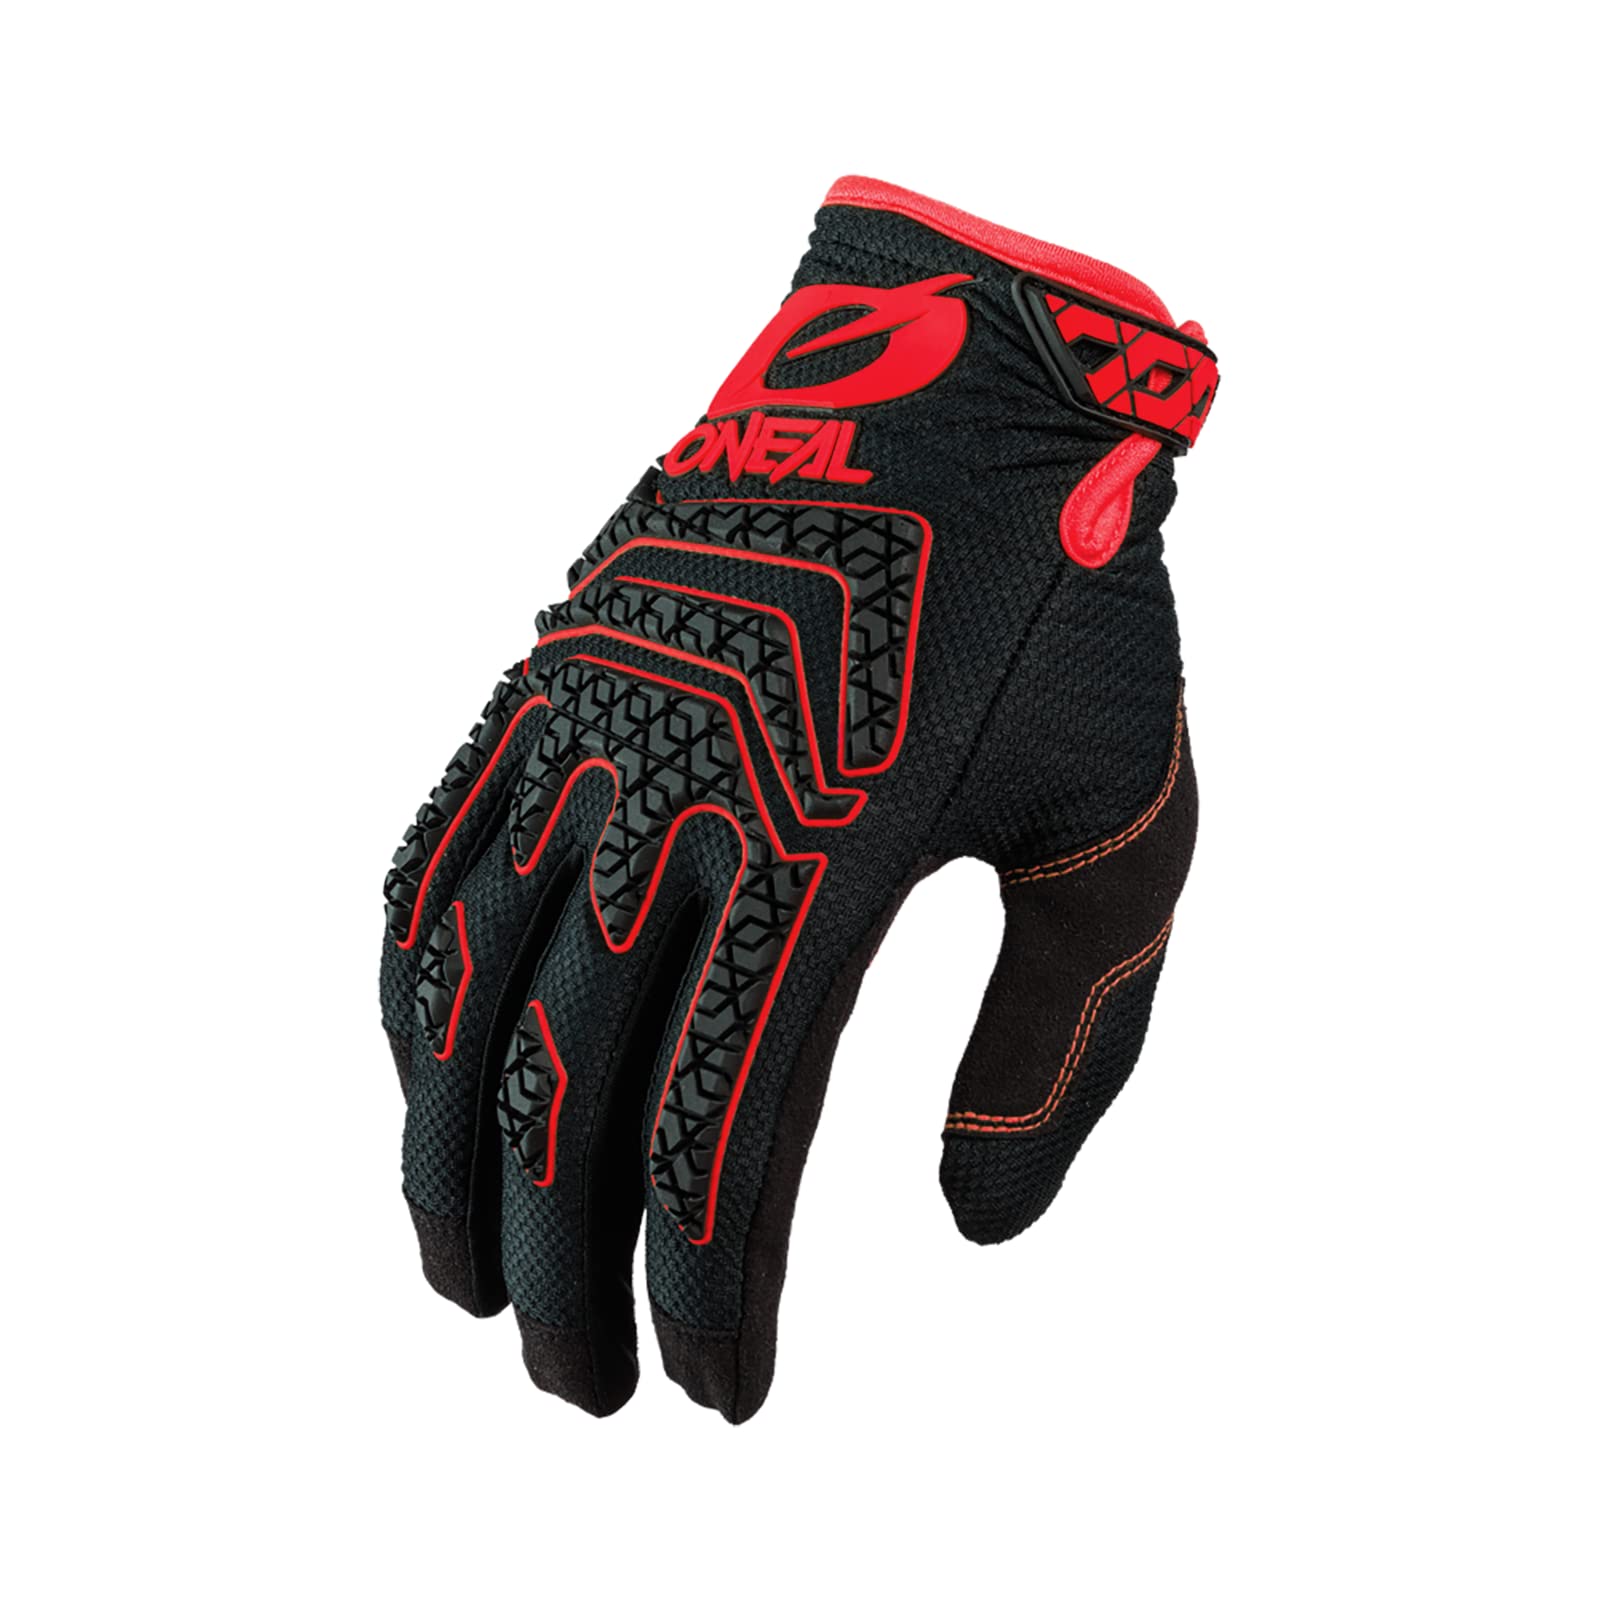 O'NEAL | Fahrrad- & Motocross-Handschuhe | MX MTB DH FR Downhill Freeride | Langlebige, Flexible Materialien, Silikonprint für Grip | Sniper Elite Glove | Erwachsene | Schwarz Rot | Größe XL von O'NEAL